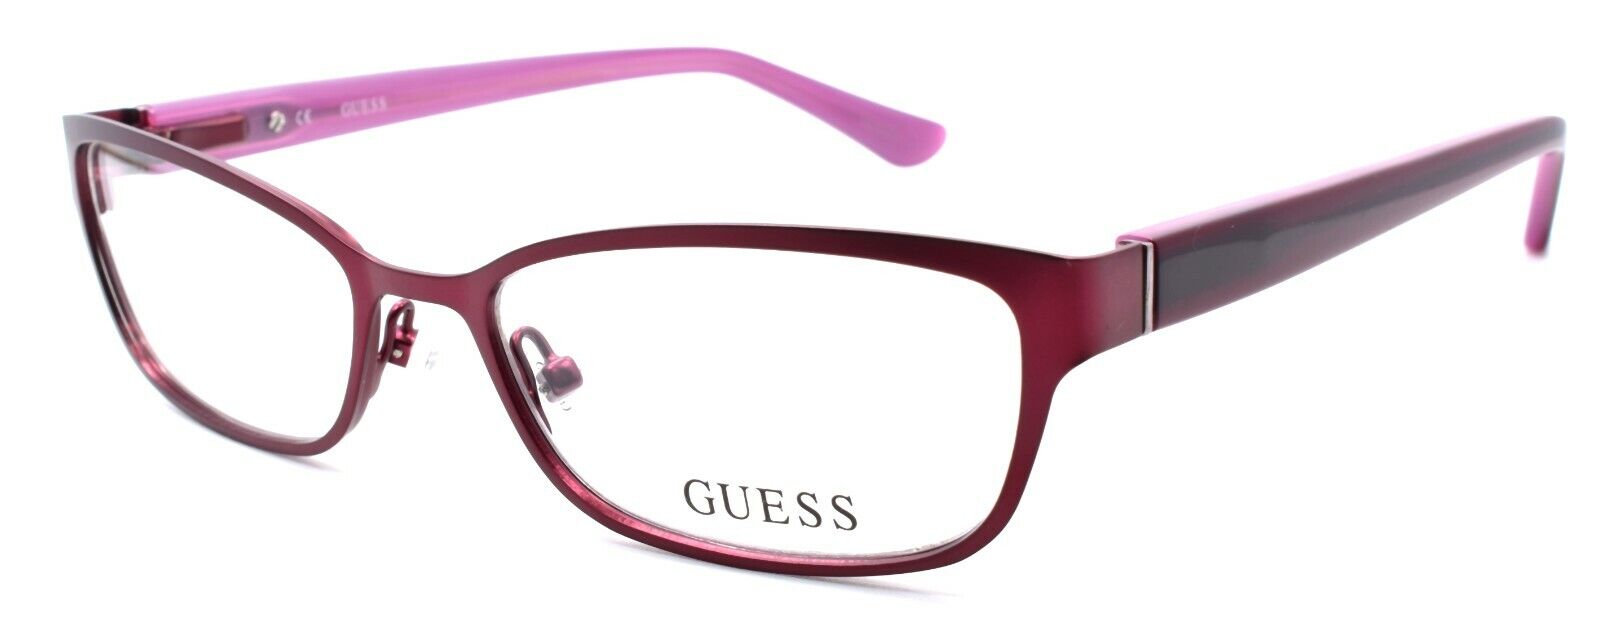 1-GUESS GU2515 070 Women's Eyeglasses Frames Petite 50-16-135 Matte Bordeaux-664689713837-IKSpecs